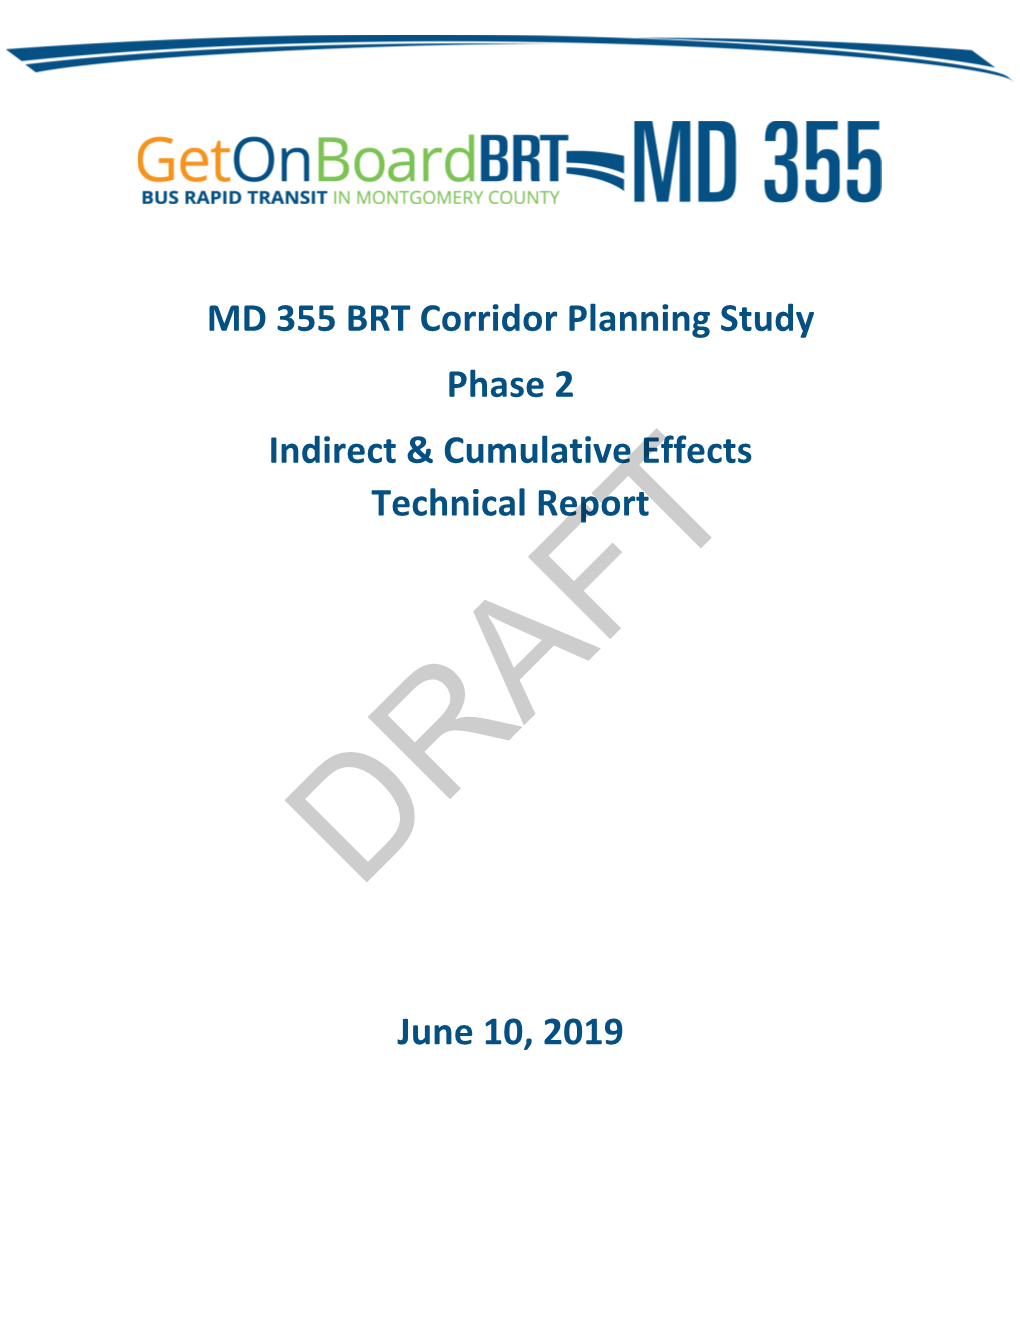 MD 355 BRT Corridor Planning Study Phase 2 Indirect & Cumulative